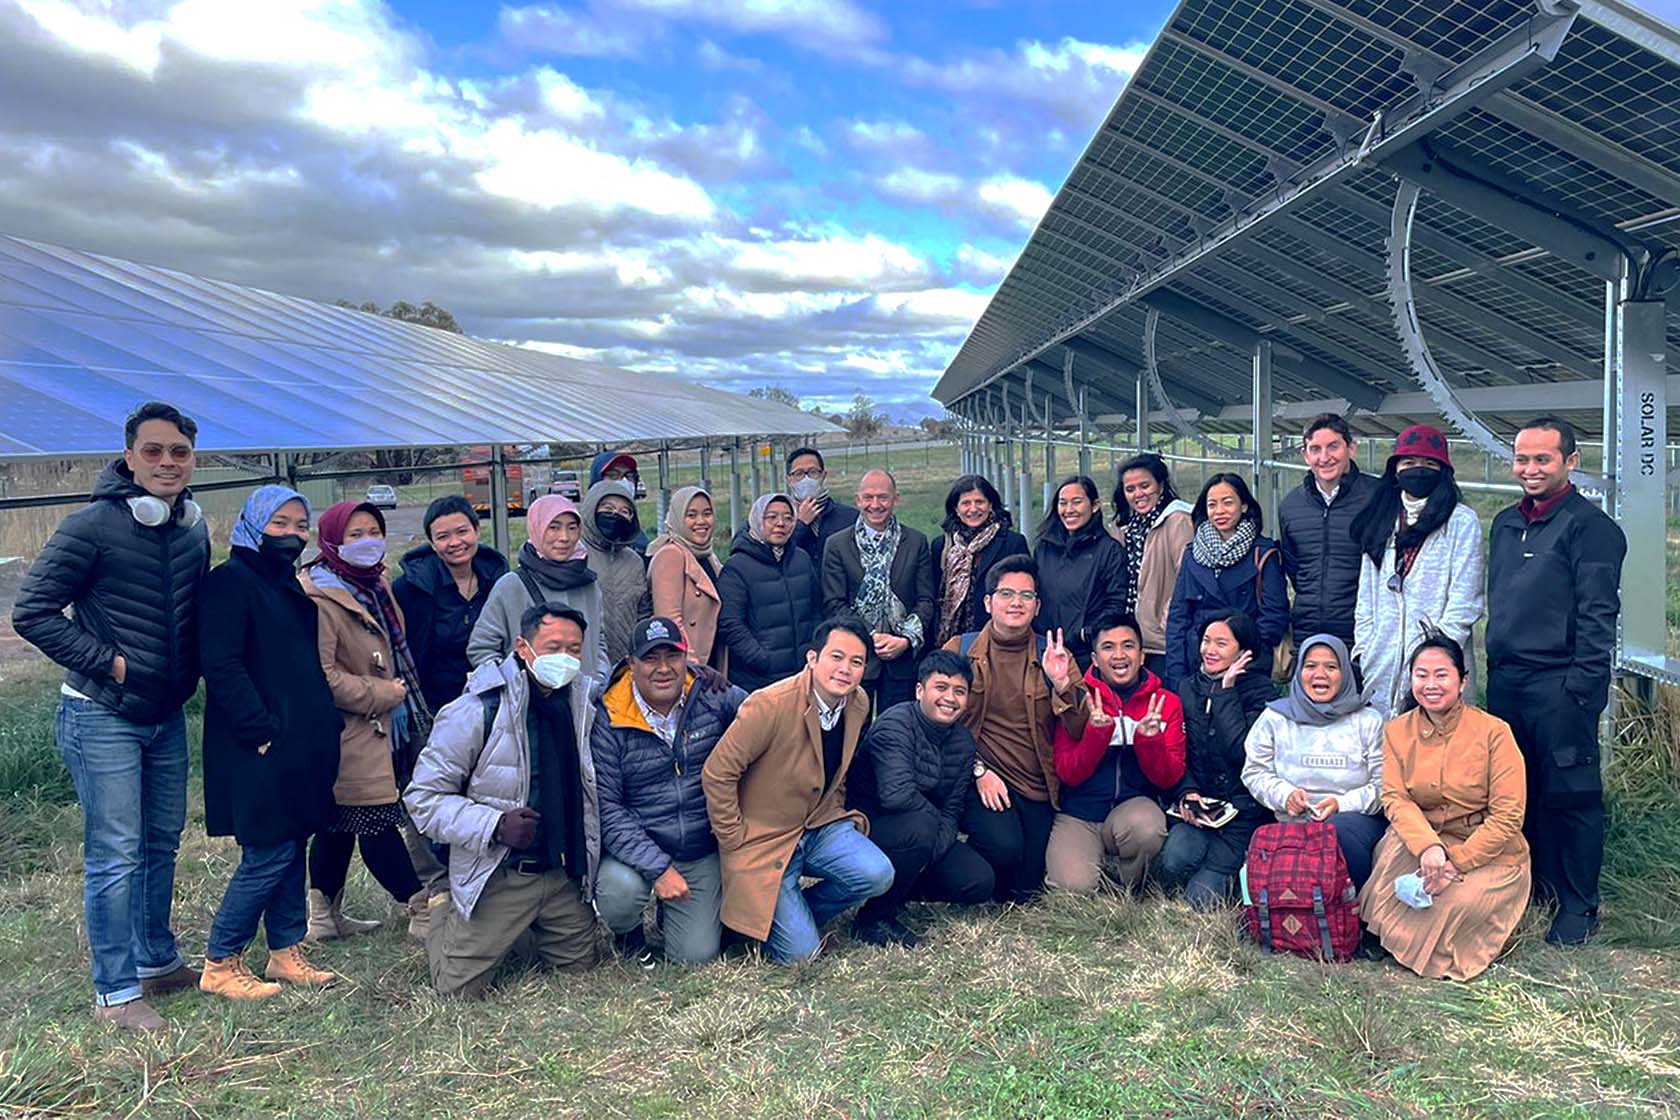 Participants take a photo outside on a solar panel farm